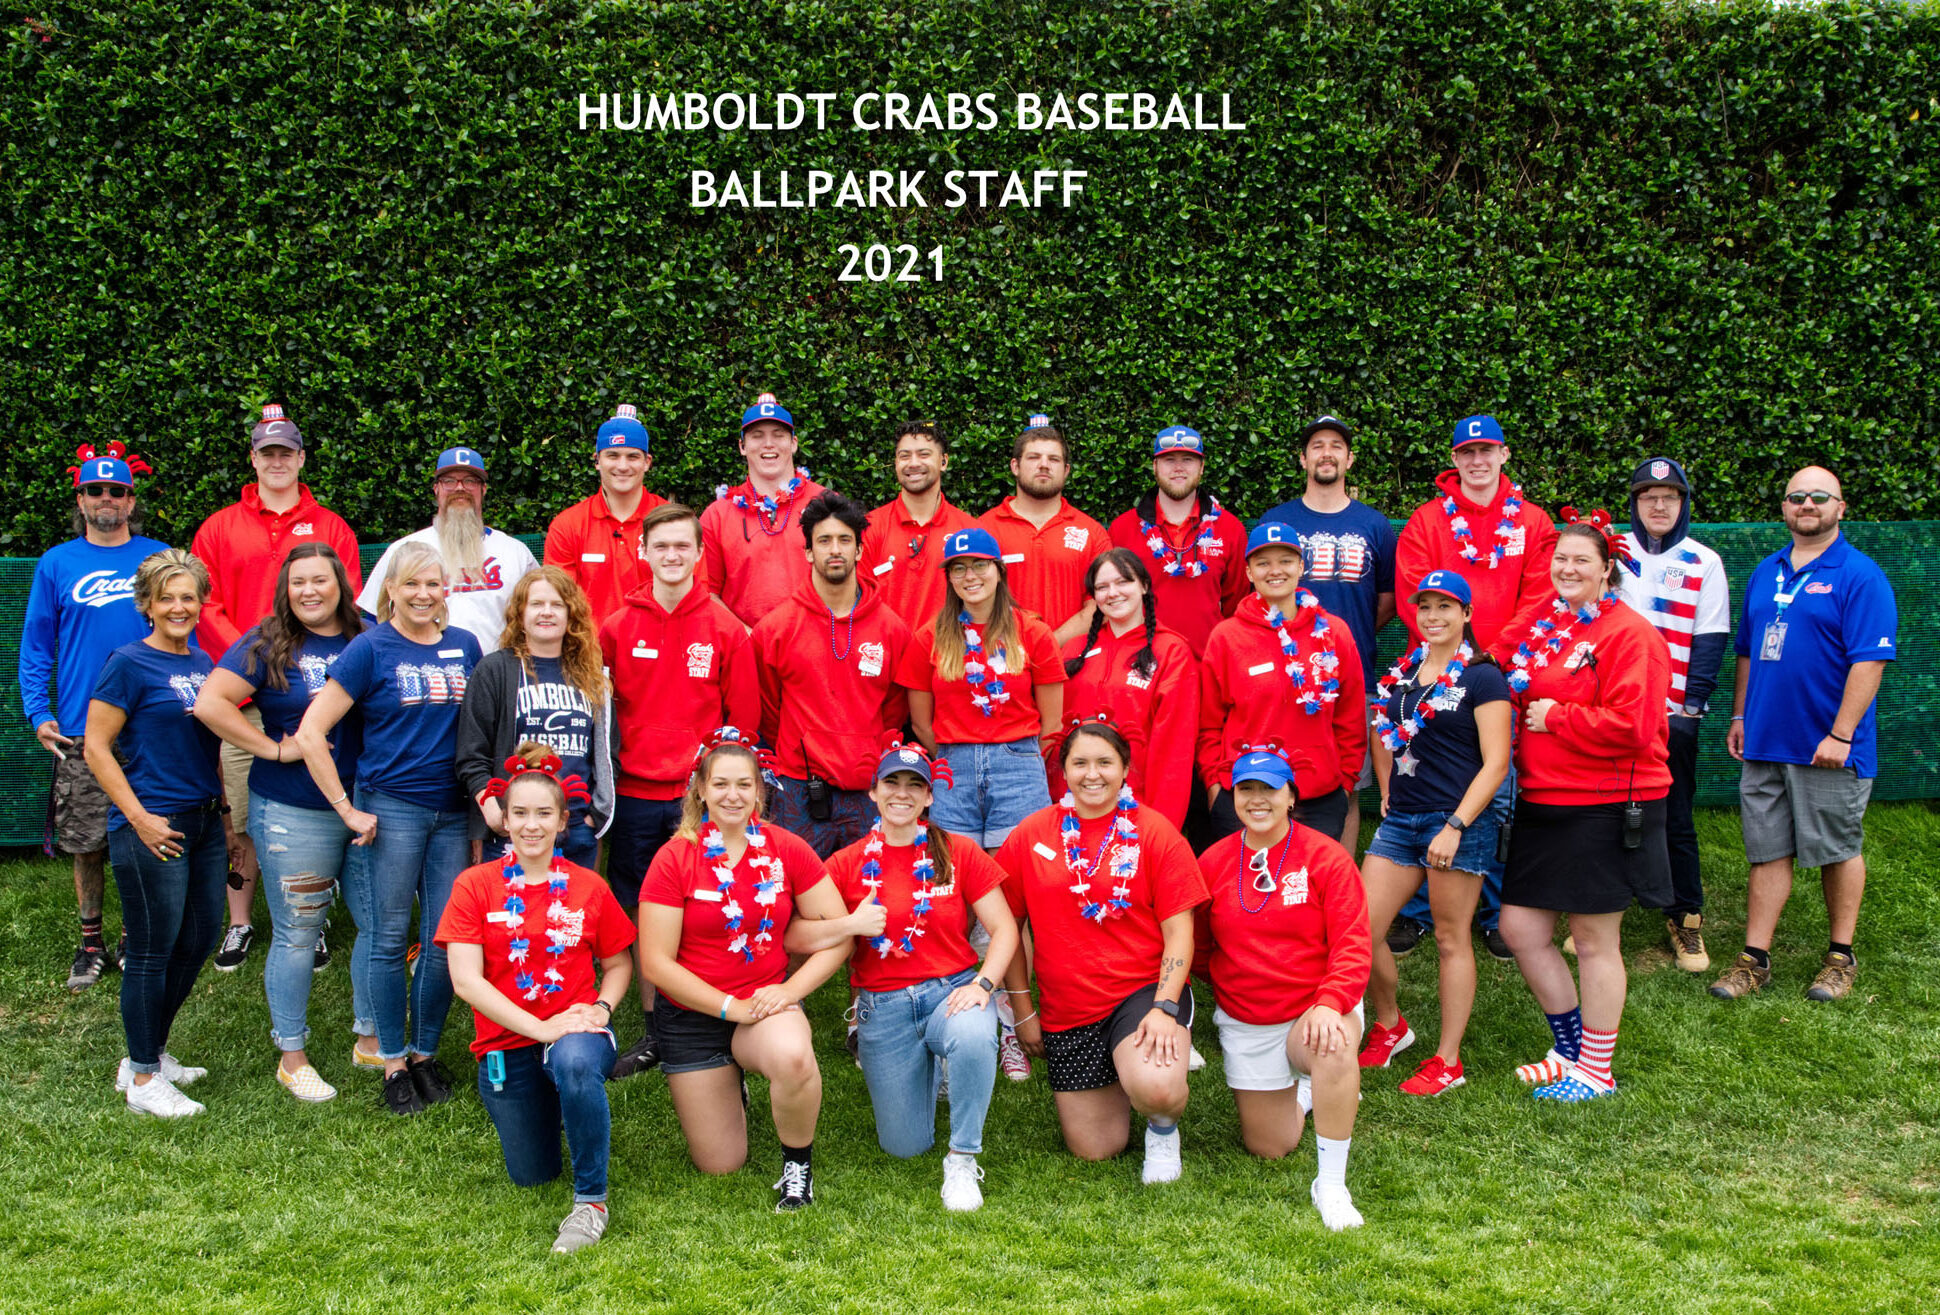 Photo of the Crabs ballpark staff